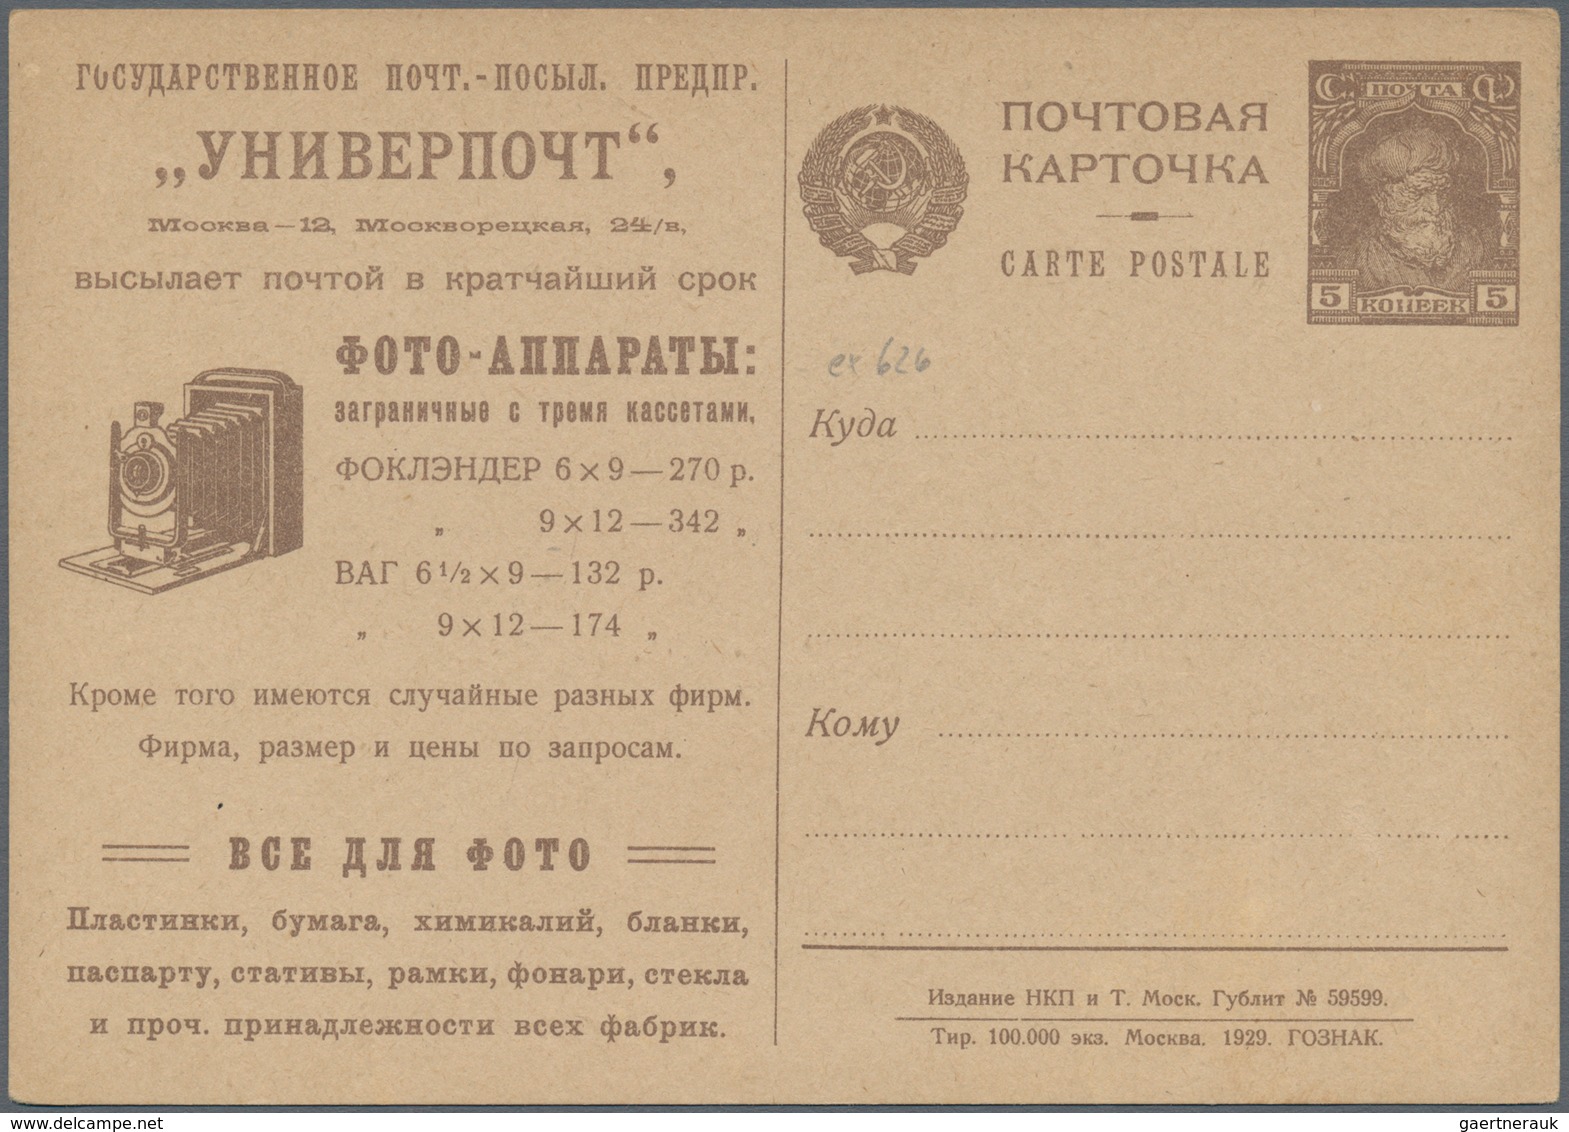 Sowjetunion - Ganzsachen: 1929, complete set of 5 picture postcards with postal advertisement of par